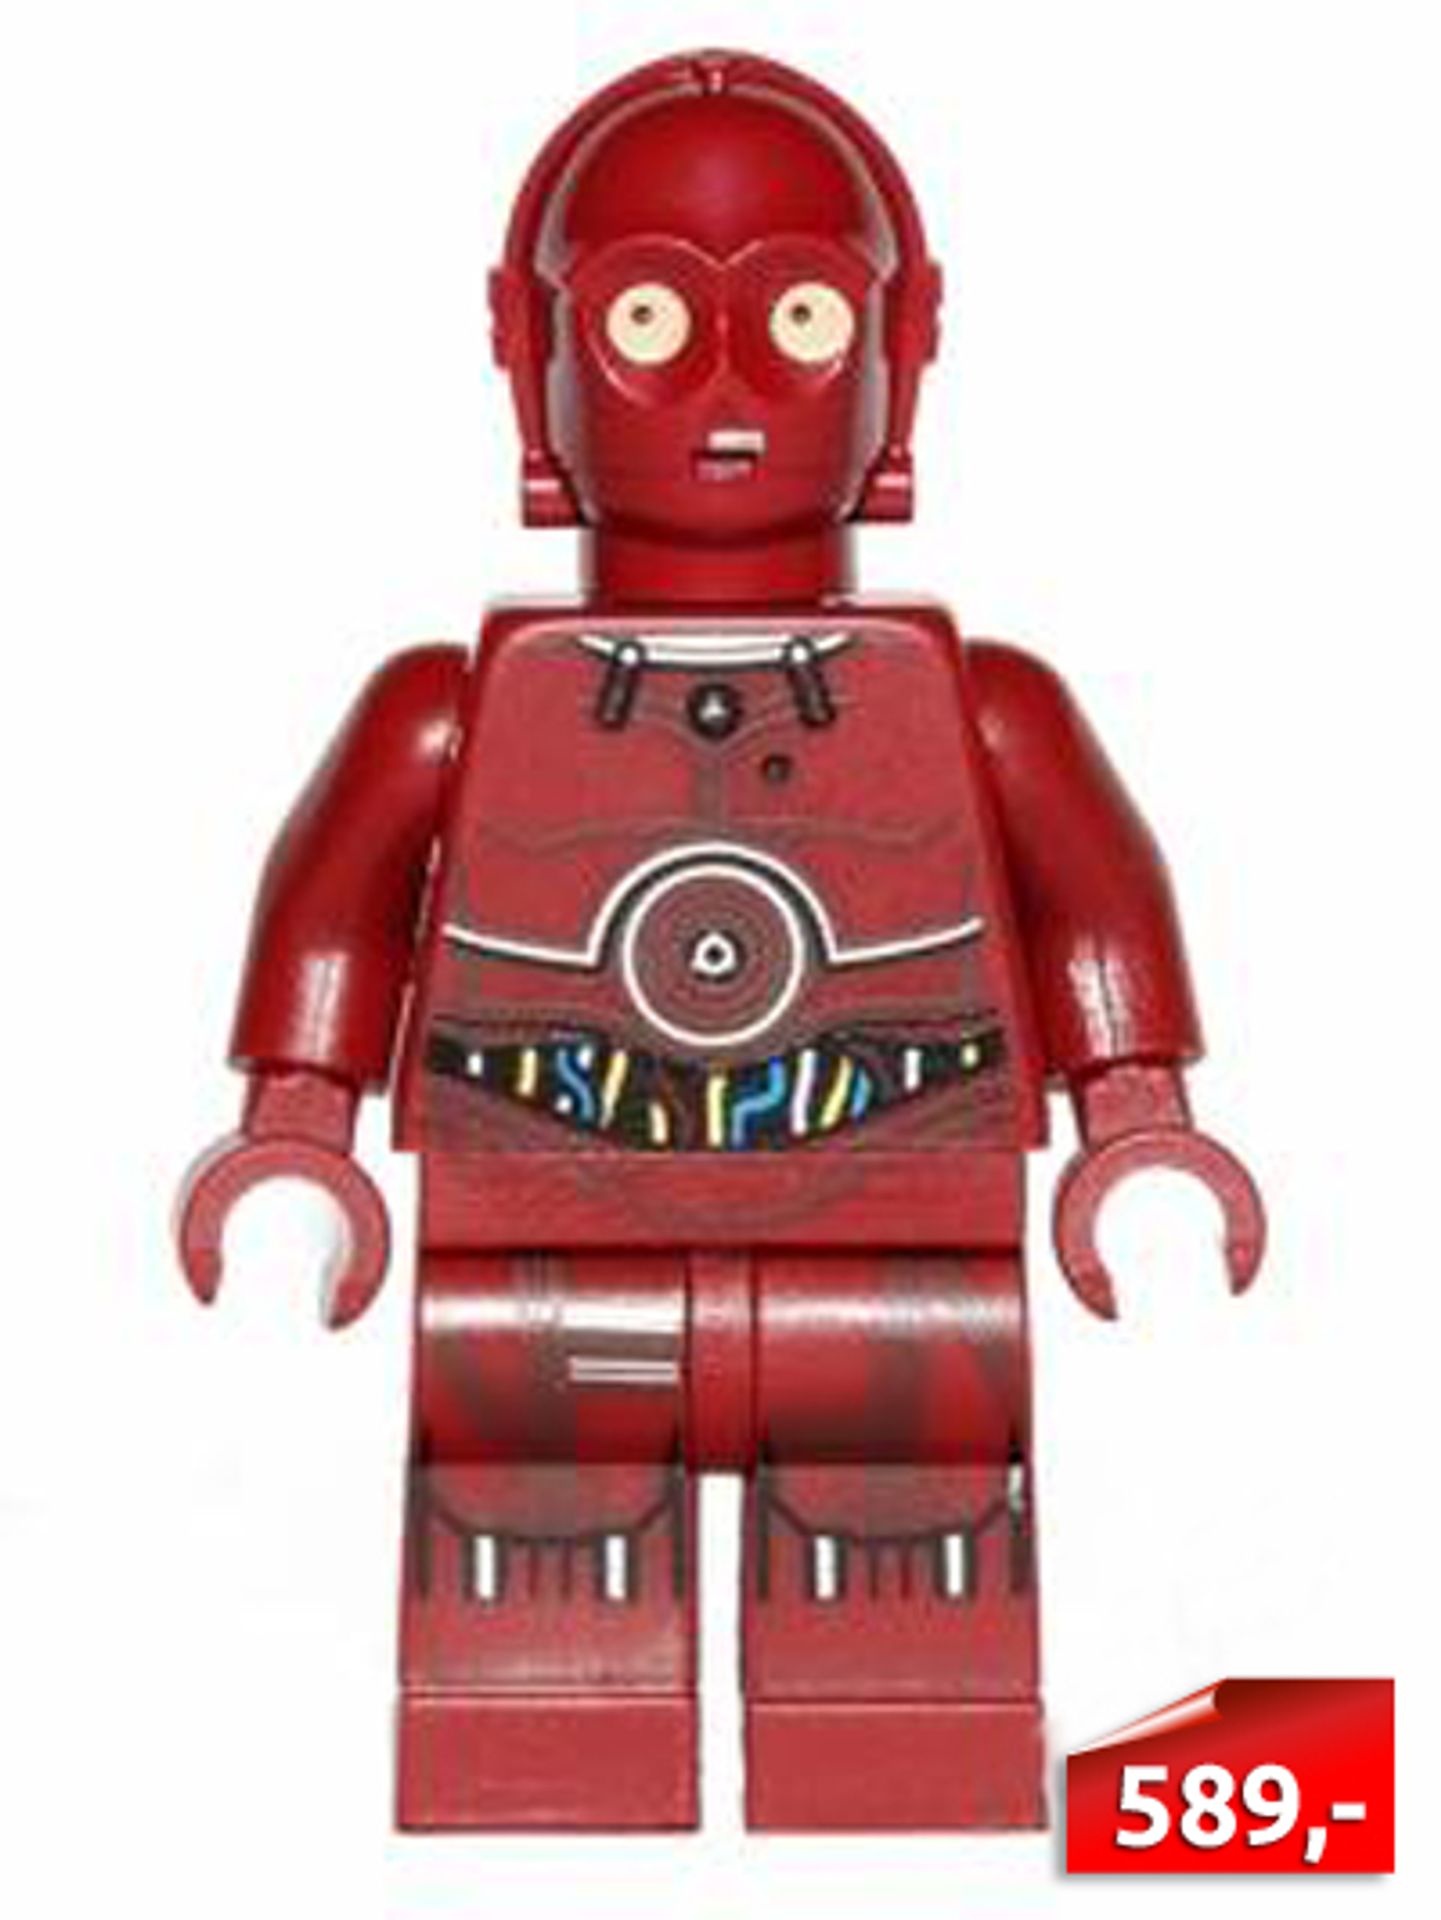 LEGO Star Wars figurka protocol droid TC-4 - 589 Kč - GALERIE: Cenné LEGO figurky (4/12)